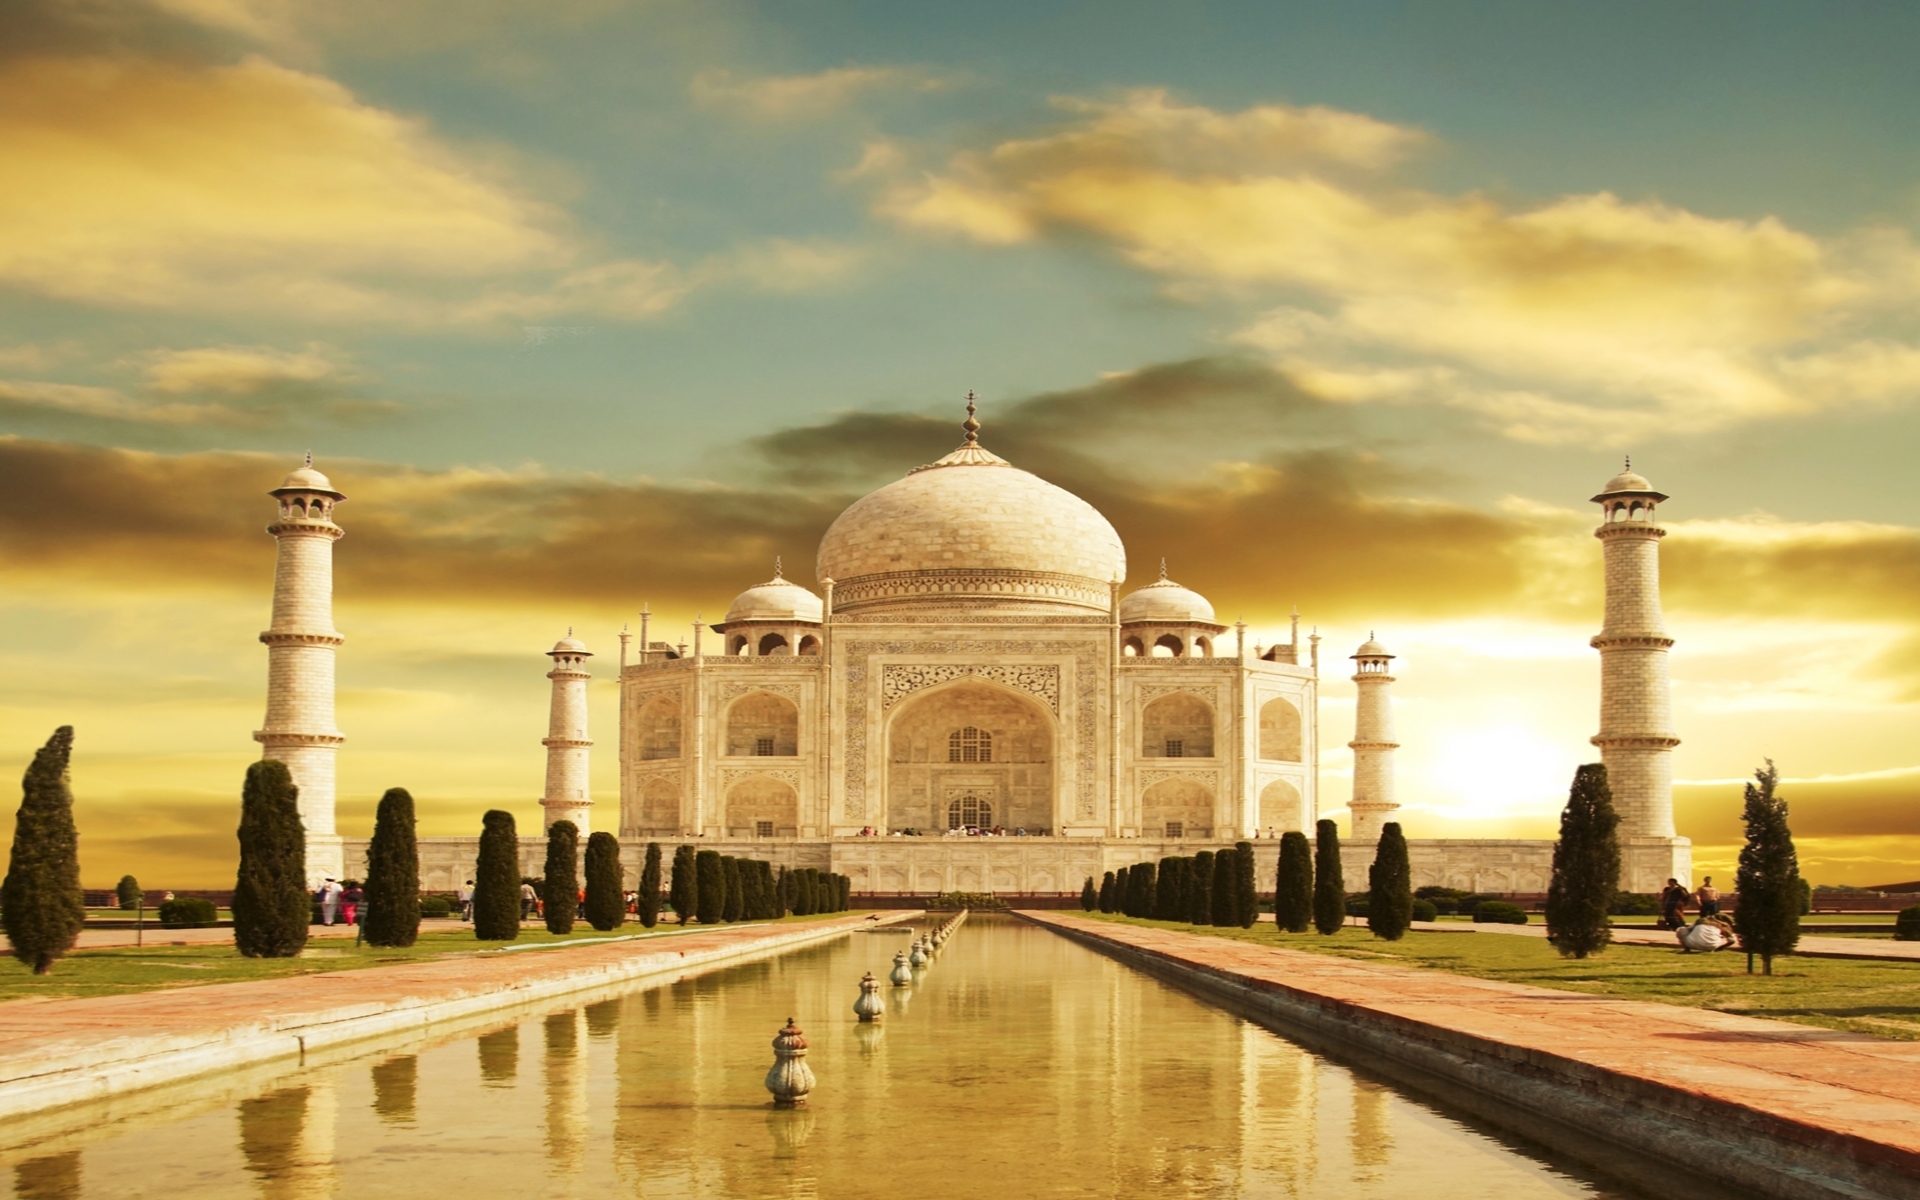 Скачать картинку Тадж Махал (Taj Mahal), Архитектура, Пейзаж в телефон бесплатно.